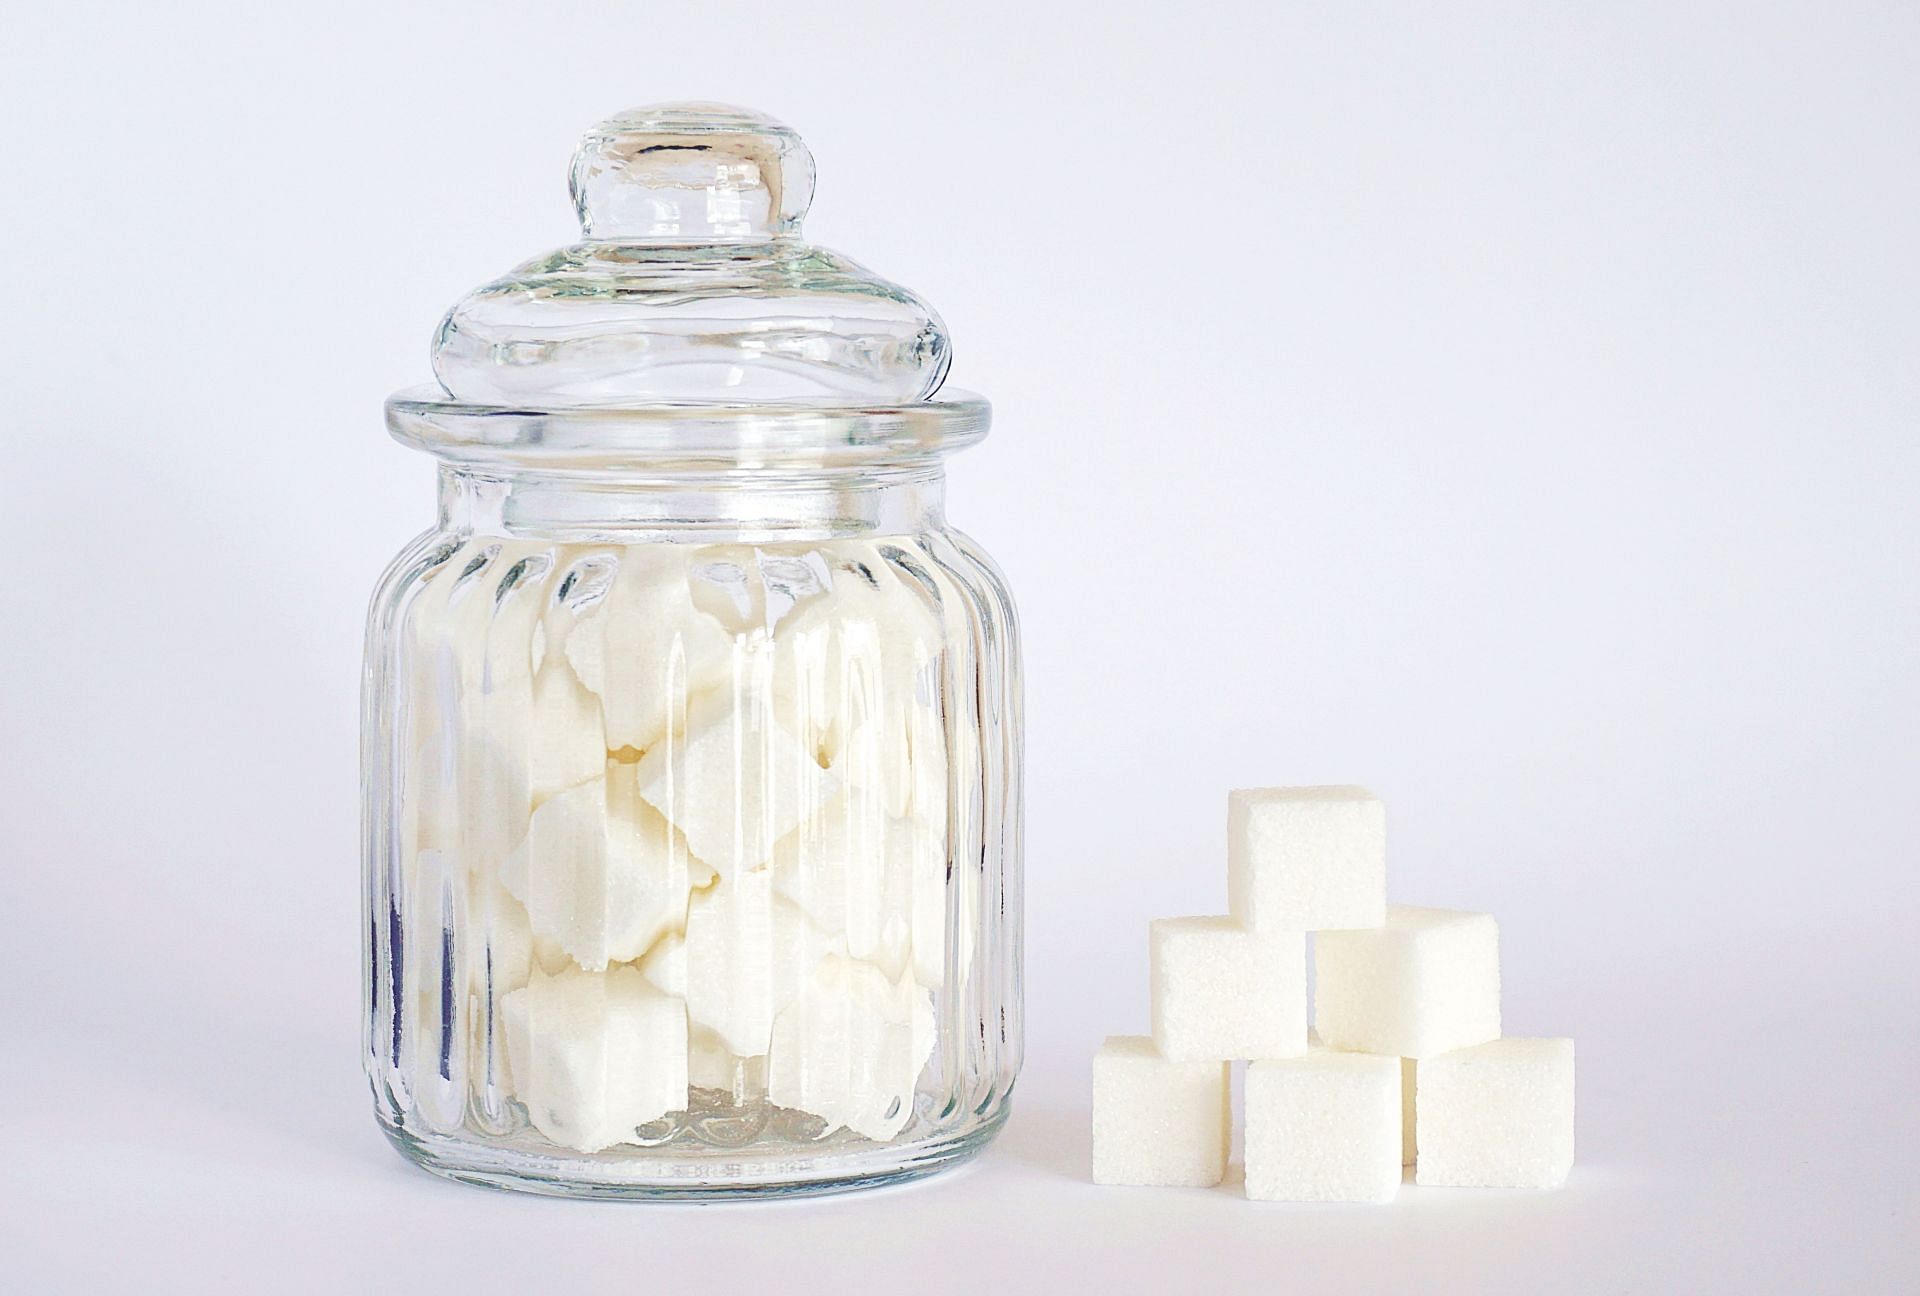 excessive sugar can cause serious illness. (Image via Pexels / suzy hazelwood)